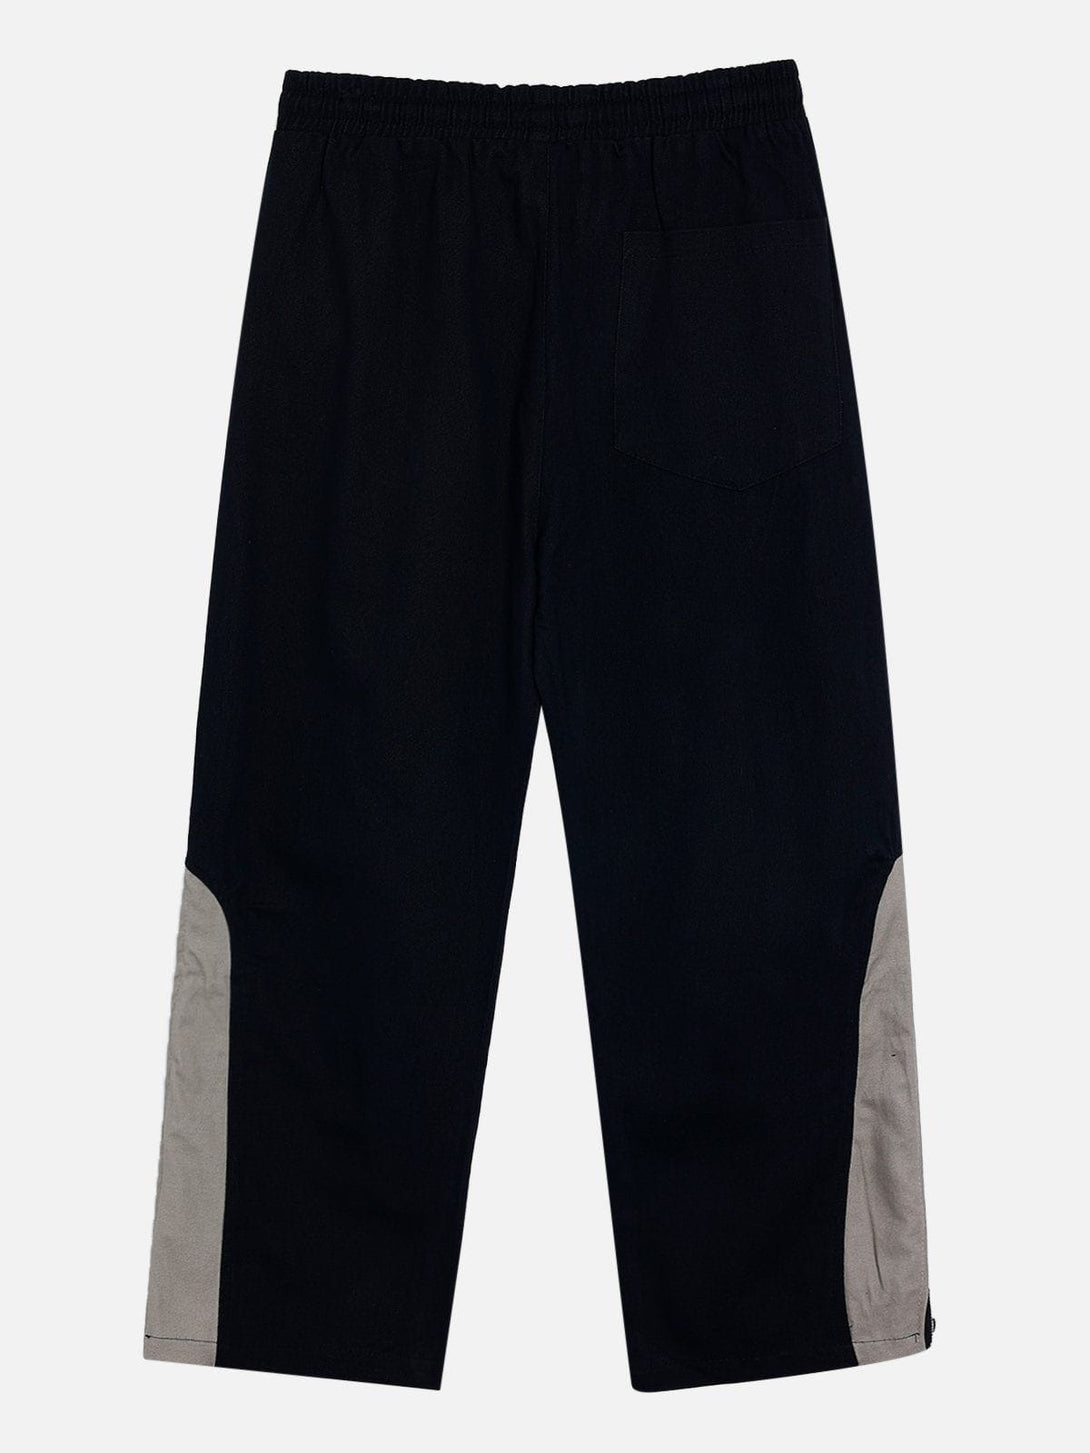 Majesda® - Trendy Zipper Straight-Leg Pants outfit ideas streetwear fashion